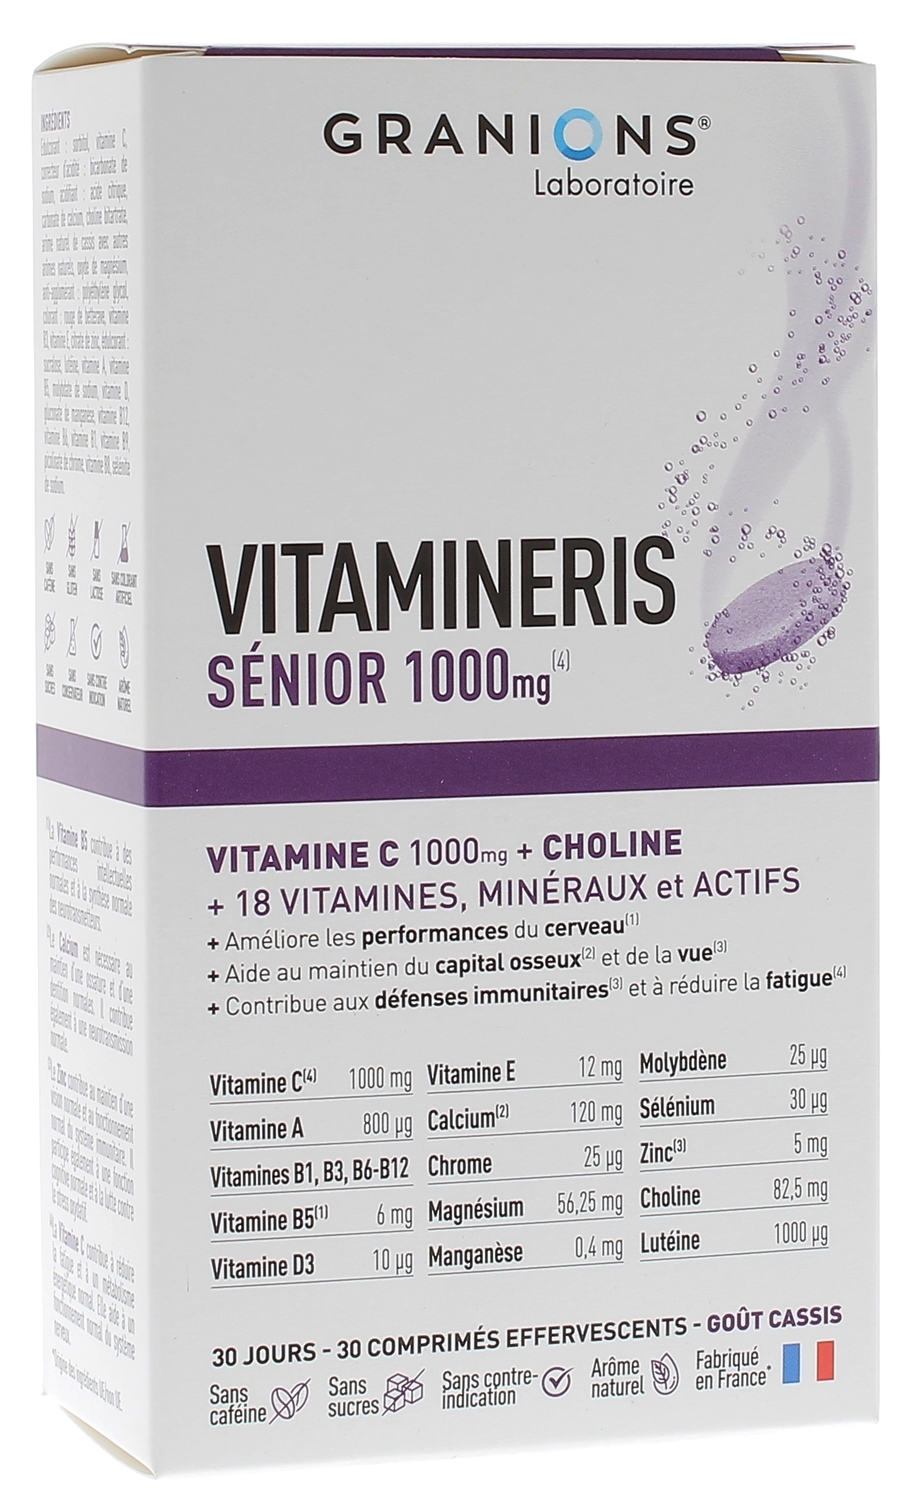 Vitamineris Sénior 1000mg Granions - complément alimentaire